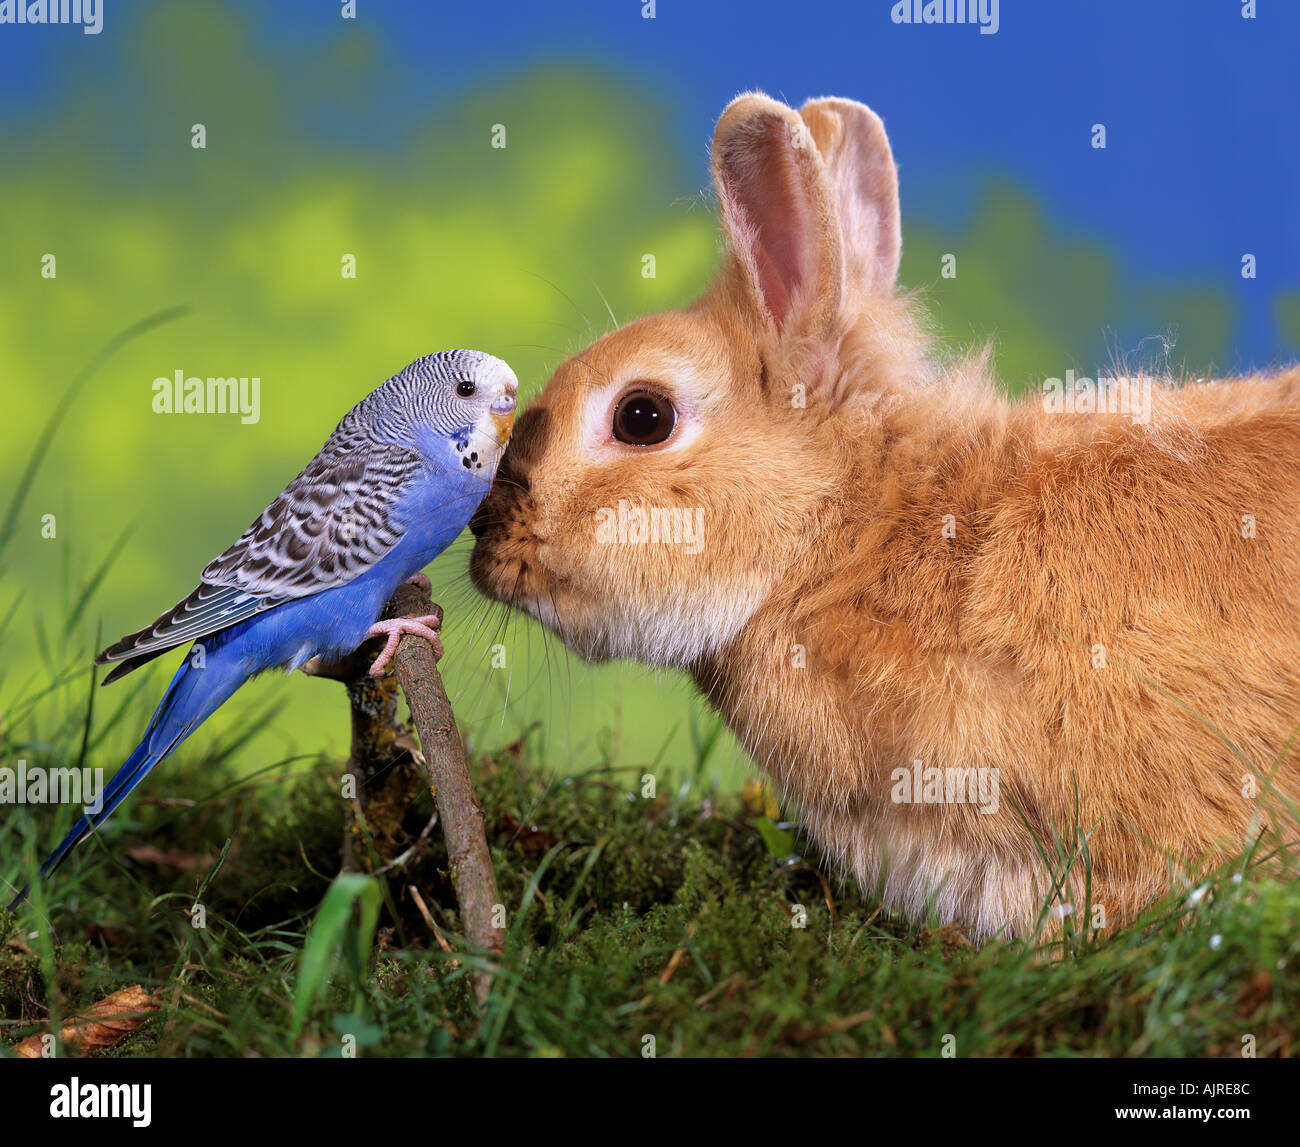 animal friendship: dwarf rabbit with budgerigar Stock Photo